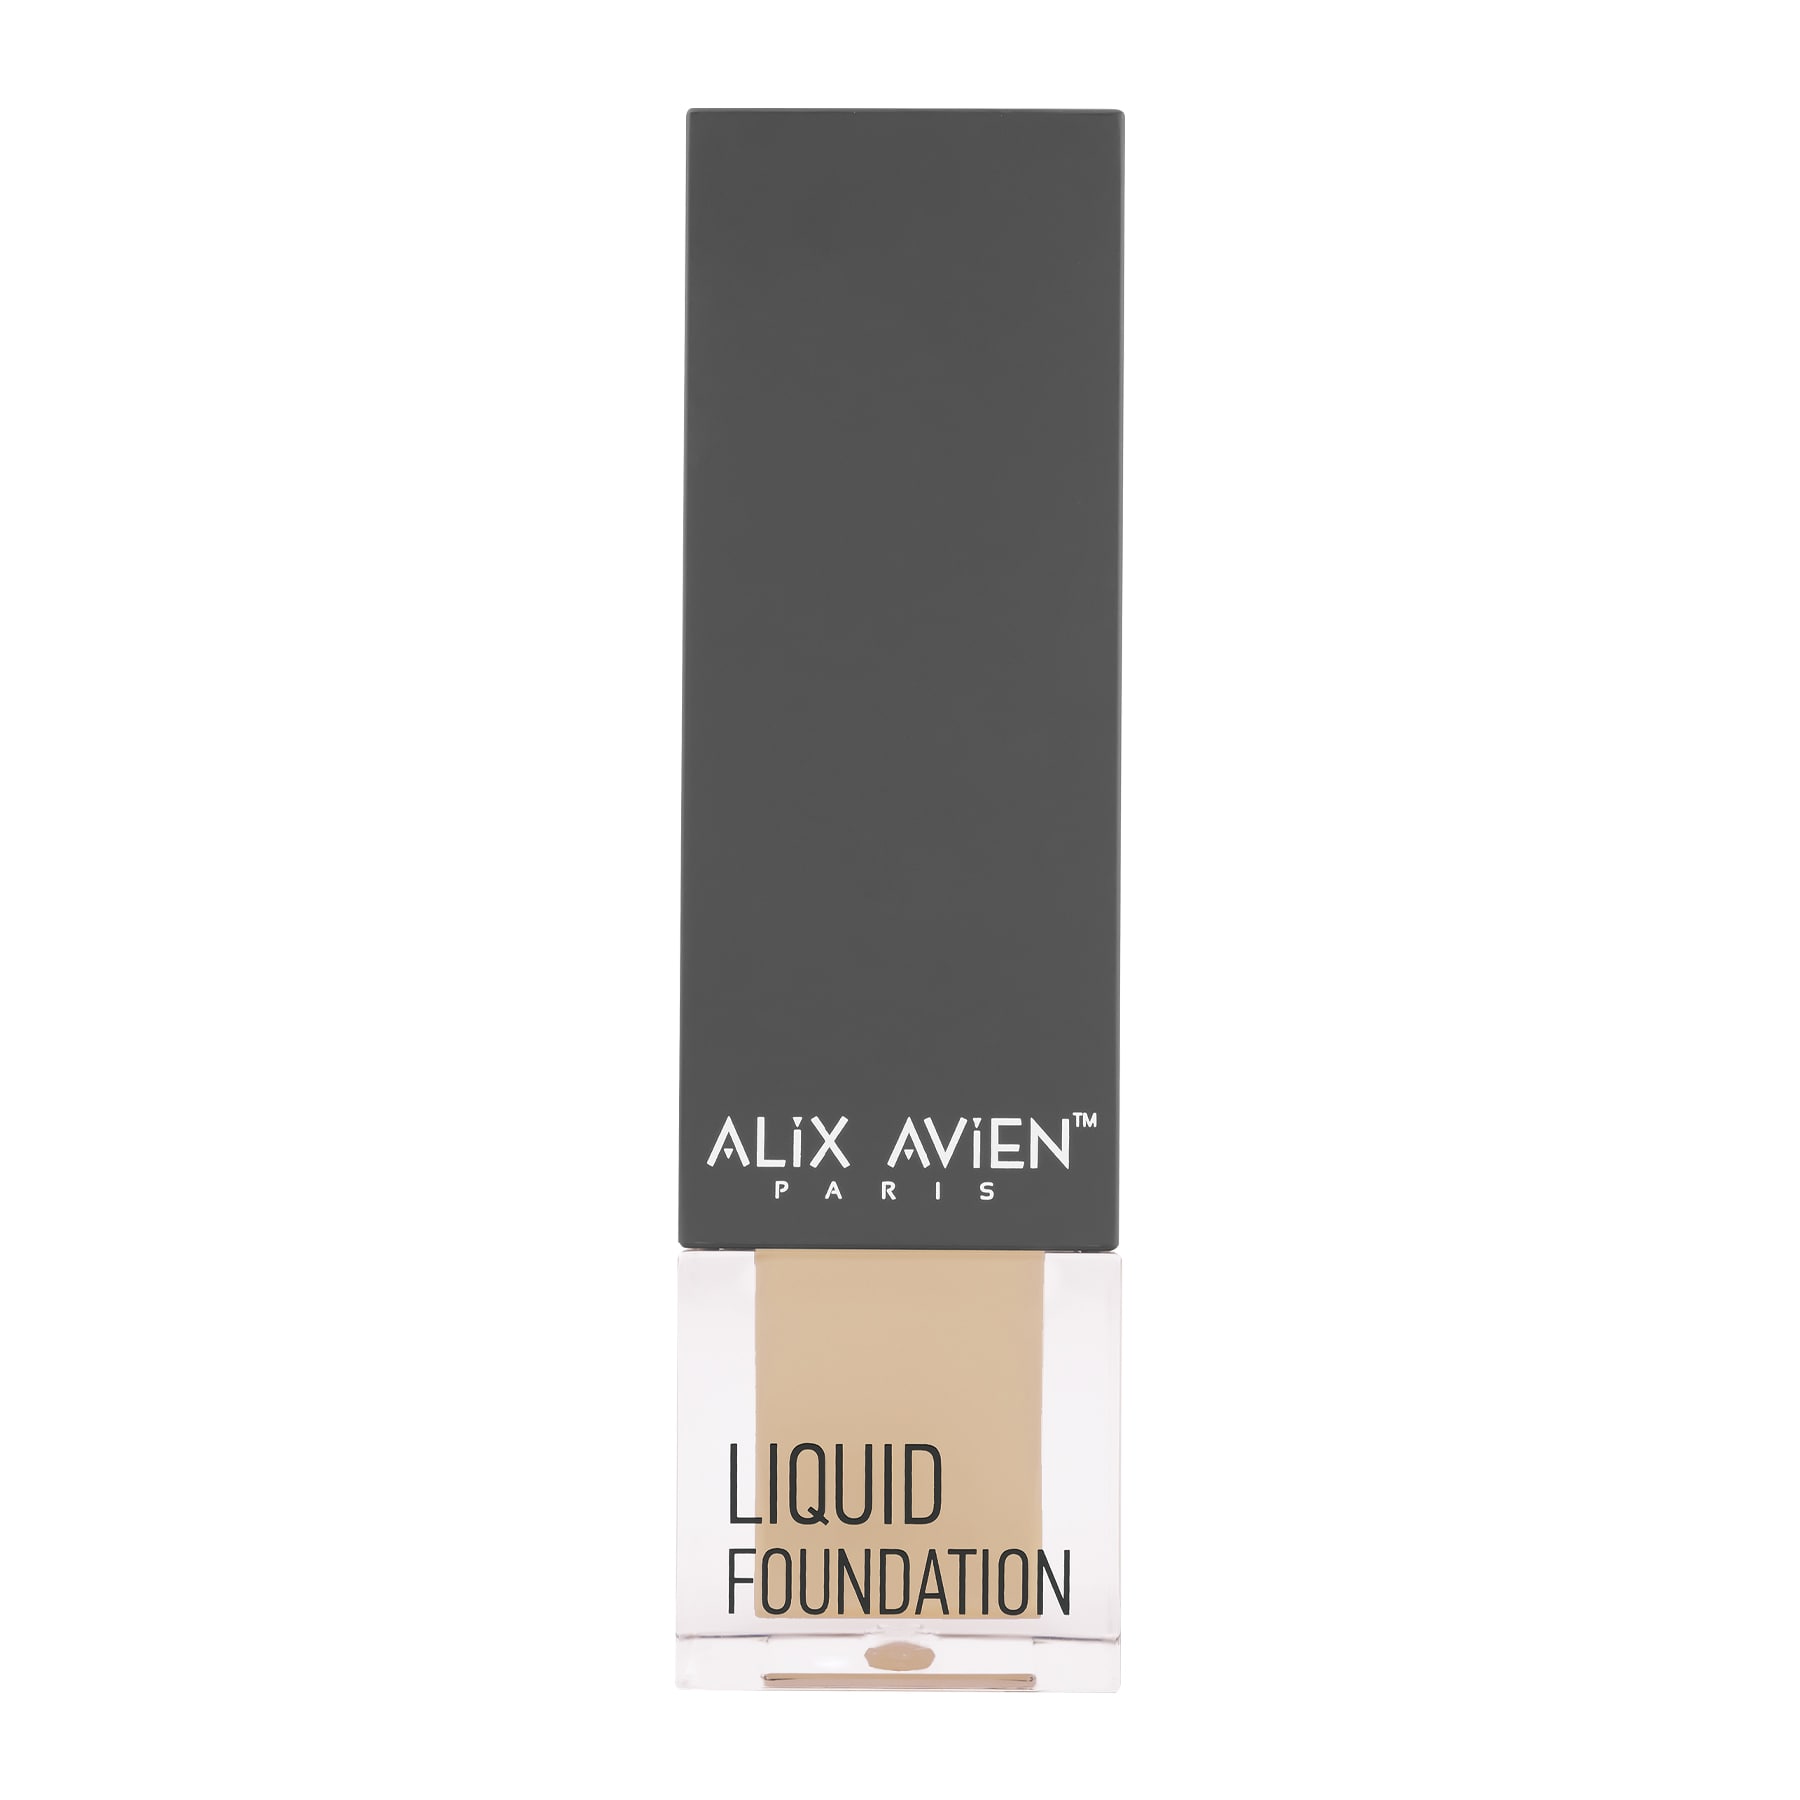 Liquid-Foundation-304-min